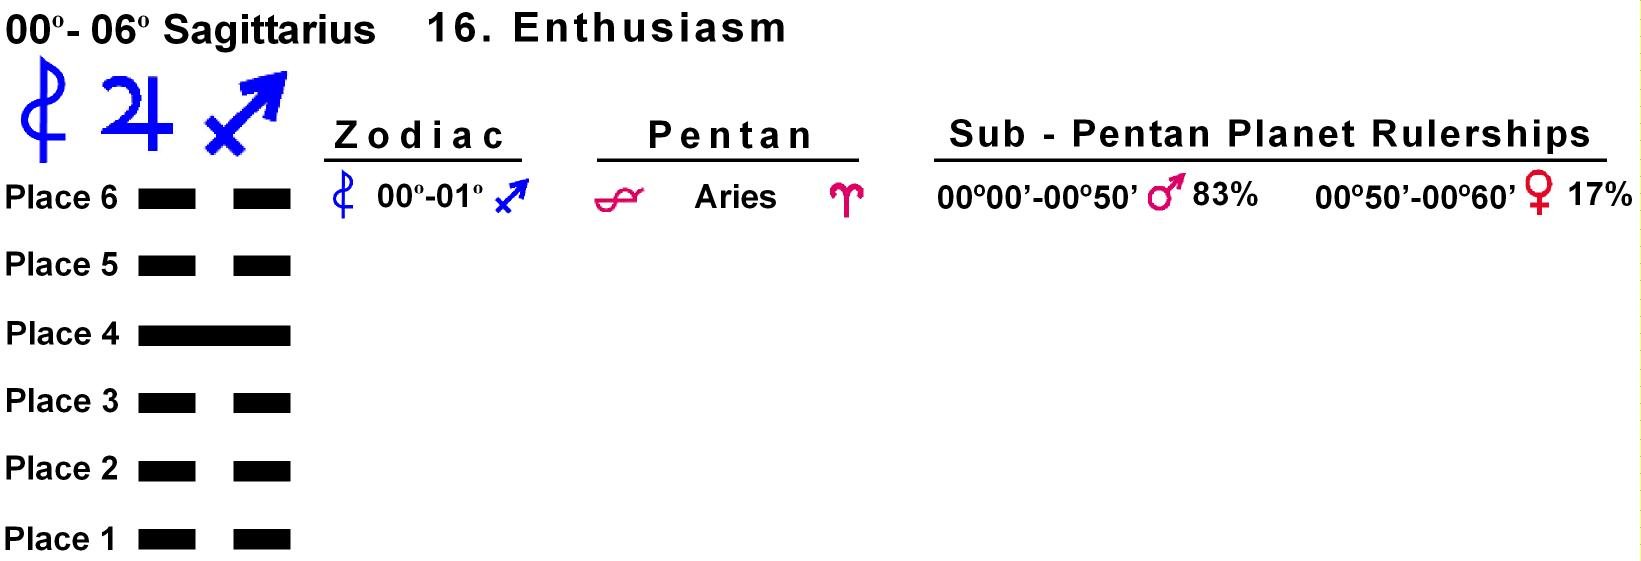 Pent-lines-09SA 00-01 Hx-16 Enthusiasm